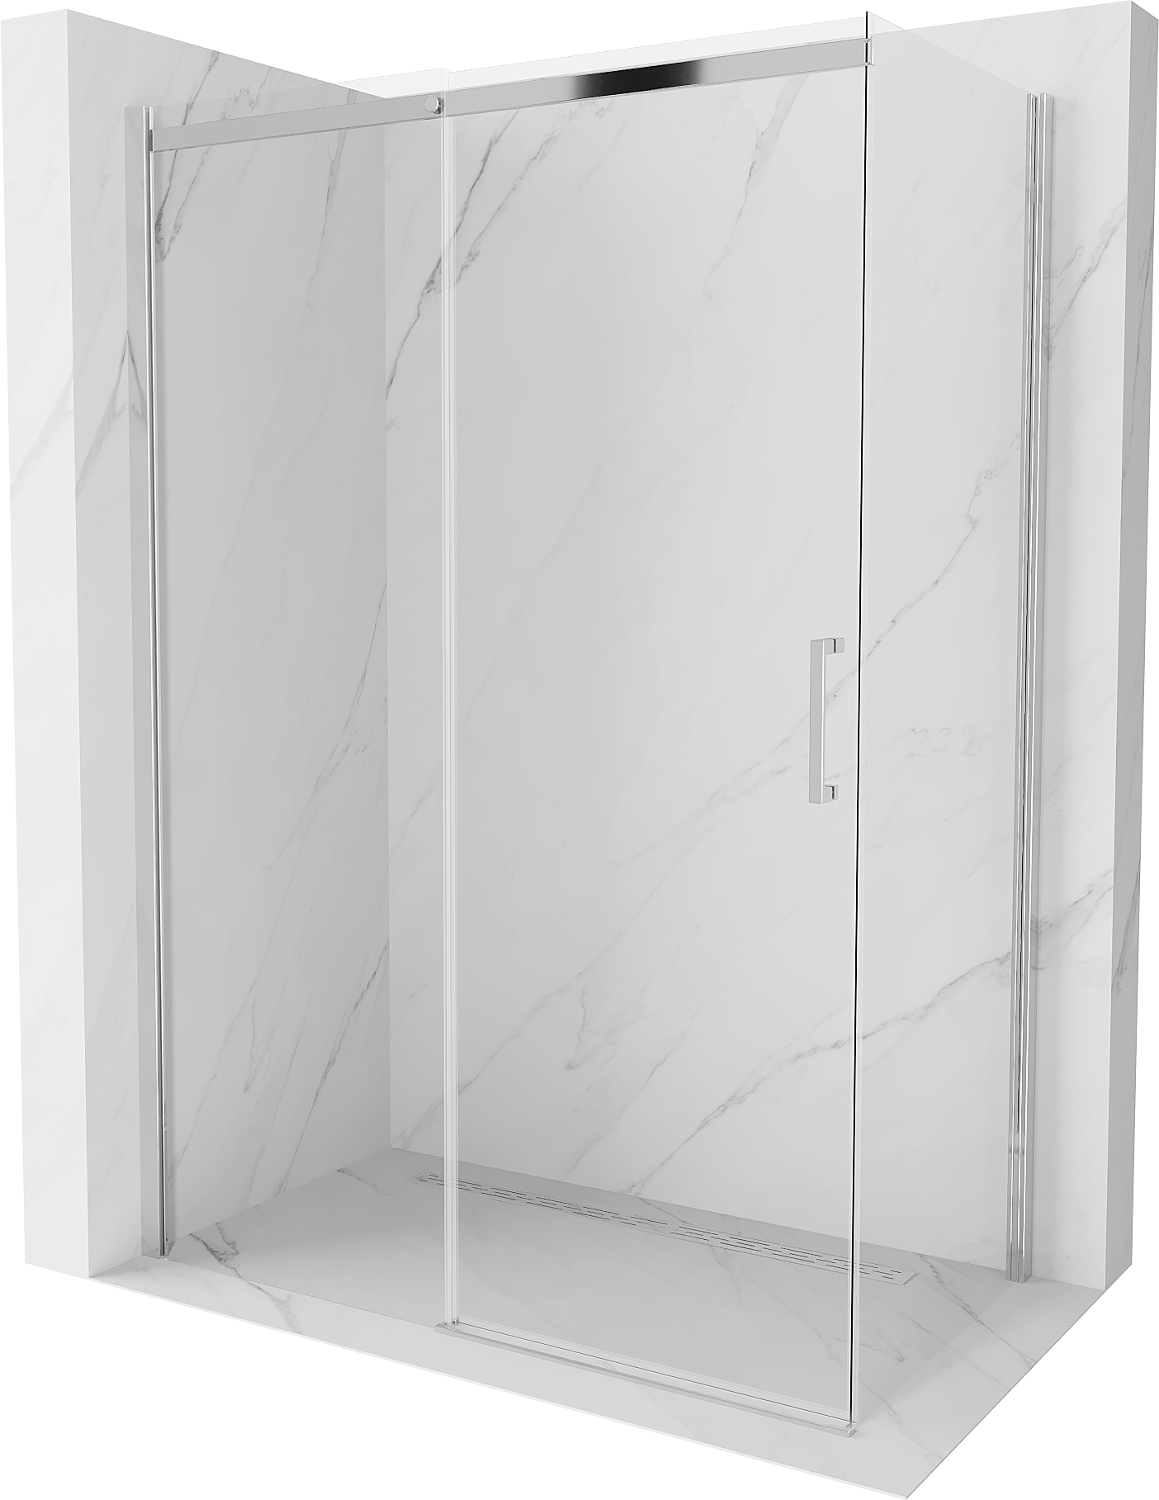 Mexen Omega kabina prysznicowa rozsuwana 160 x 80 cm, transparent, chrom - 825-160-080-01-00